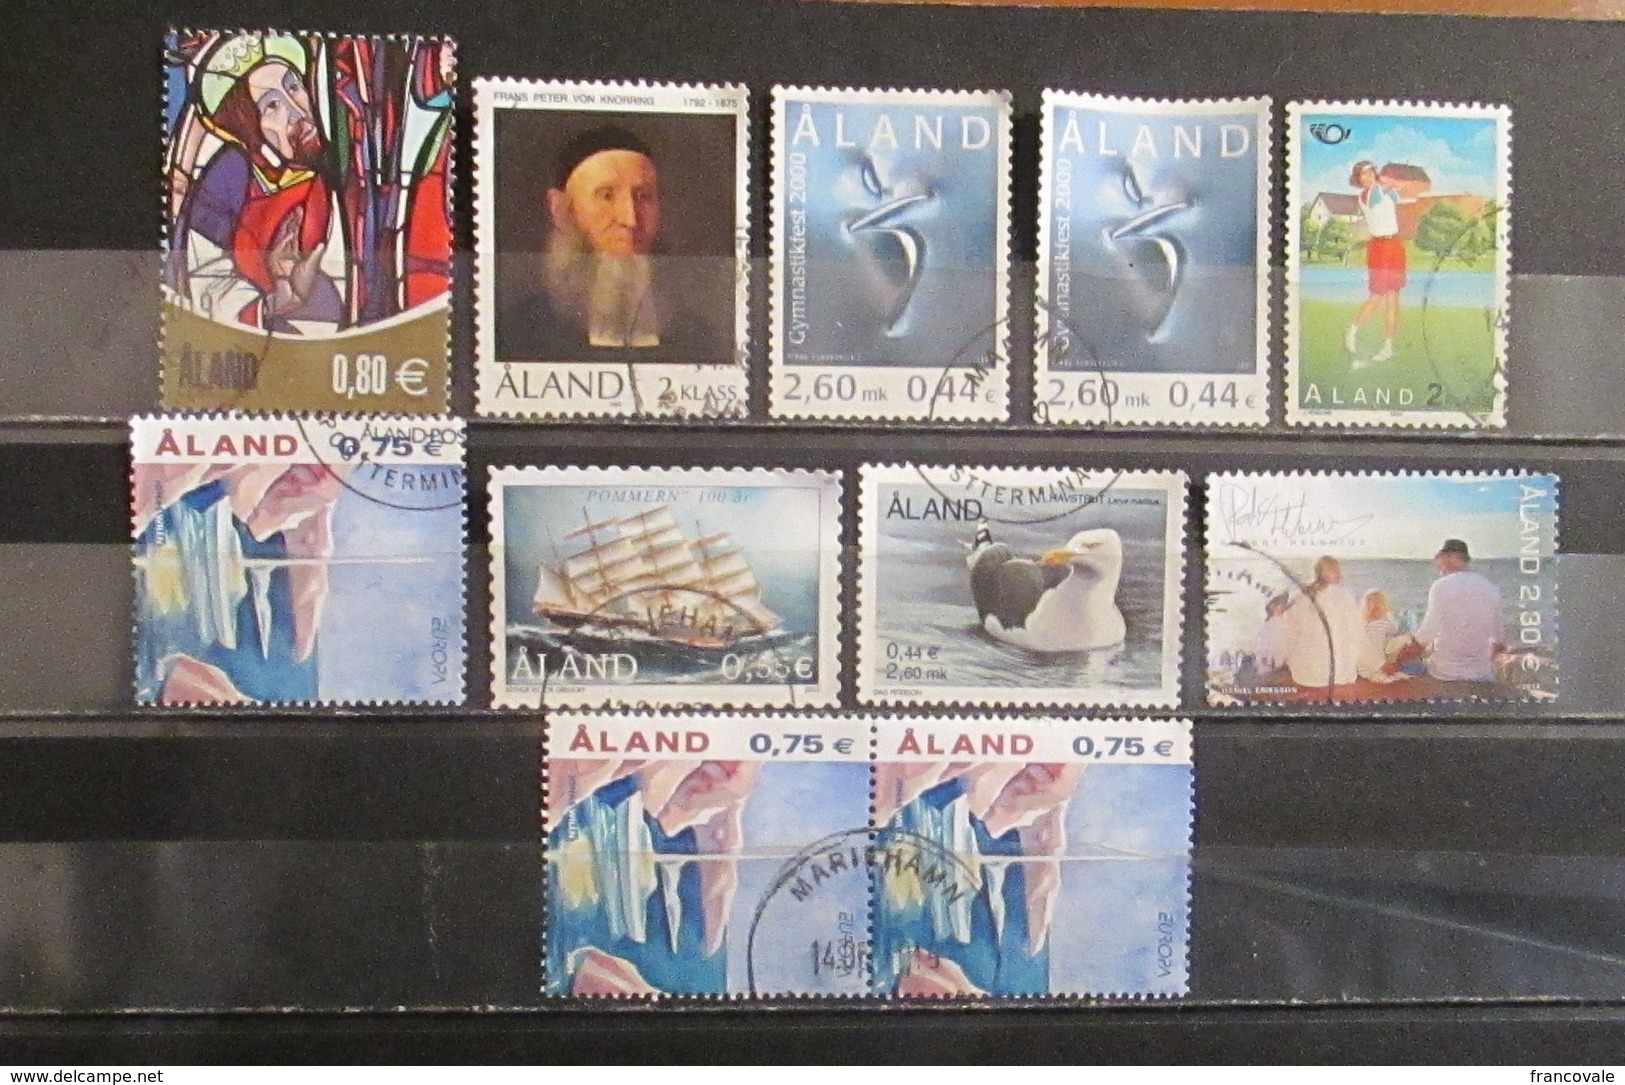 Aland 1992  - 2014 Lot 11 Stamps Used Von Knorring Golf Birds Ship Gymnastik  Europa Family - Aland